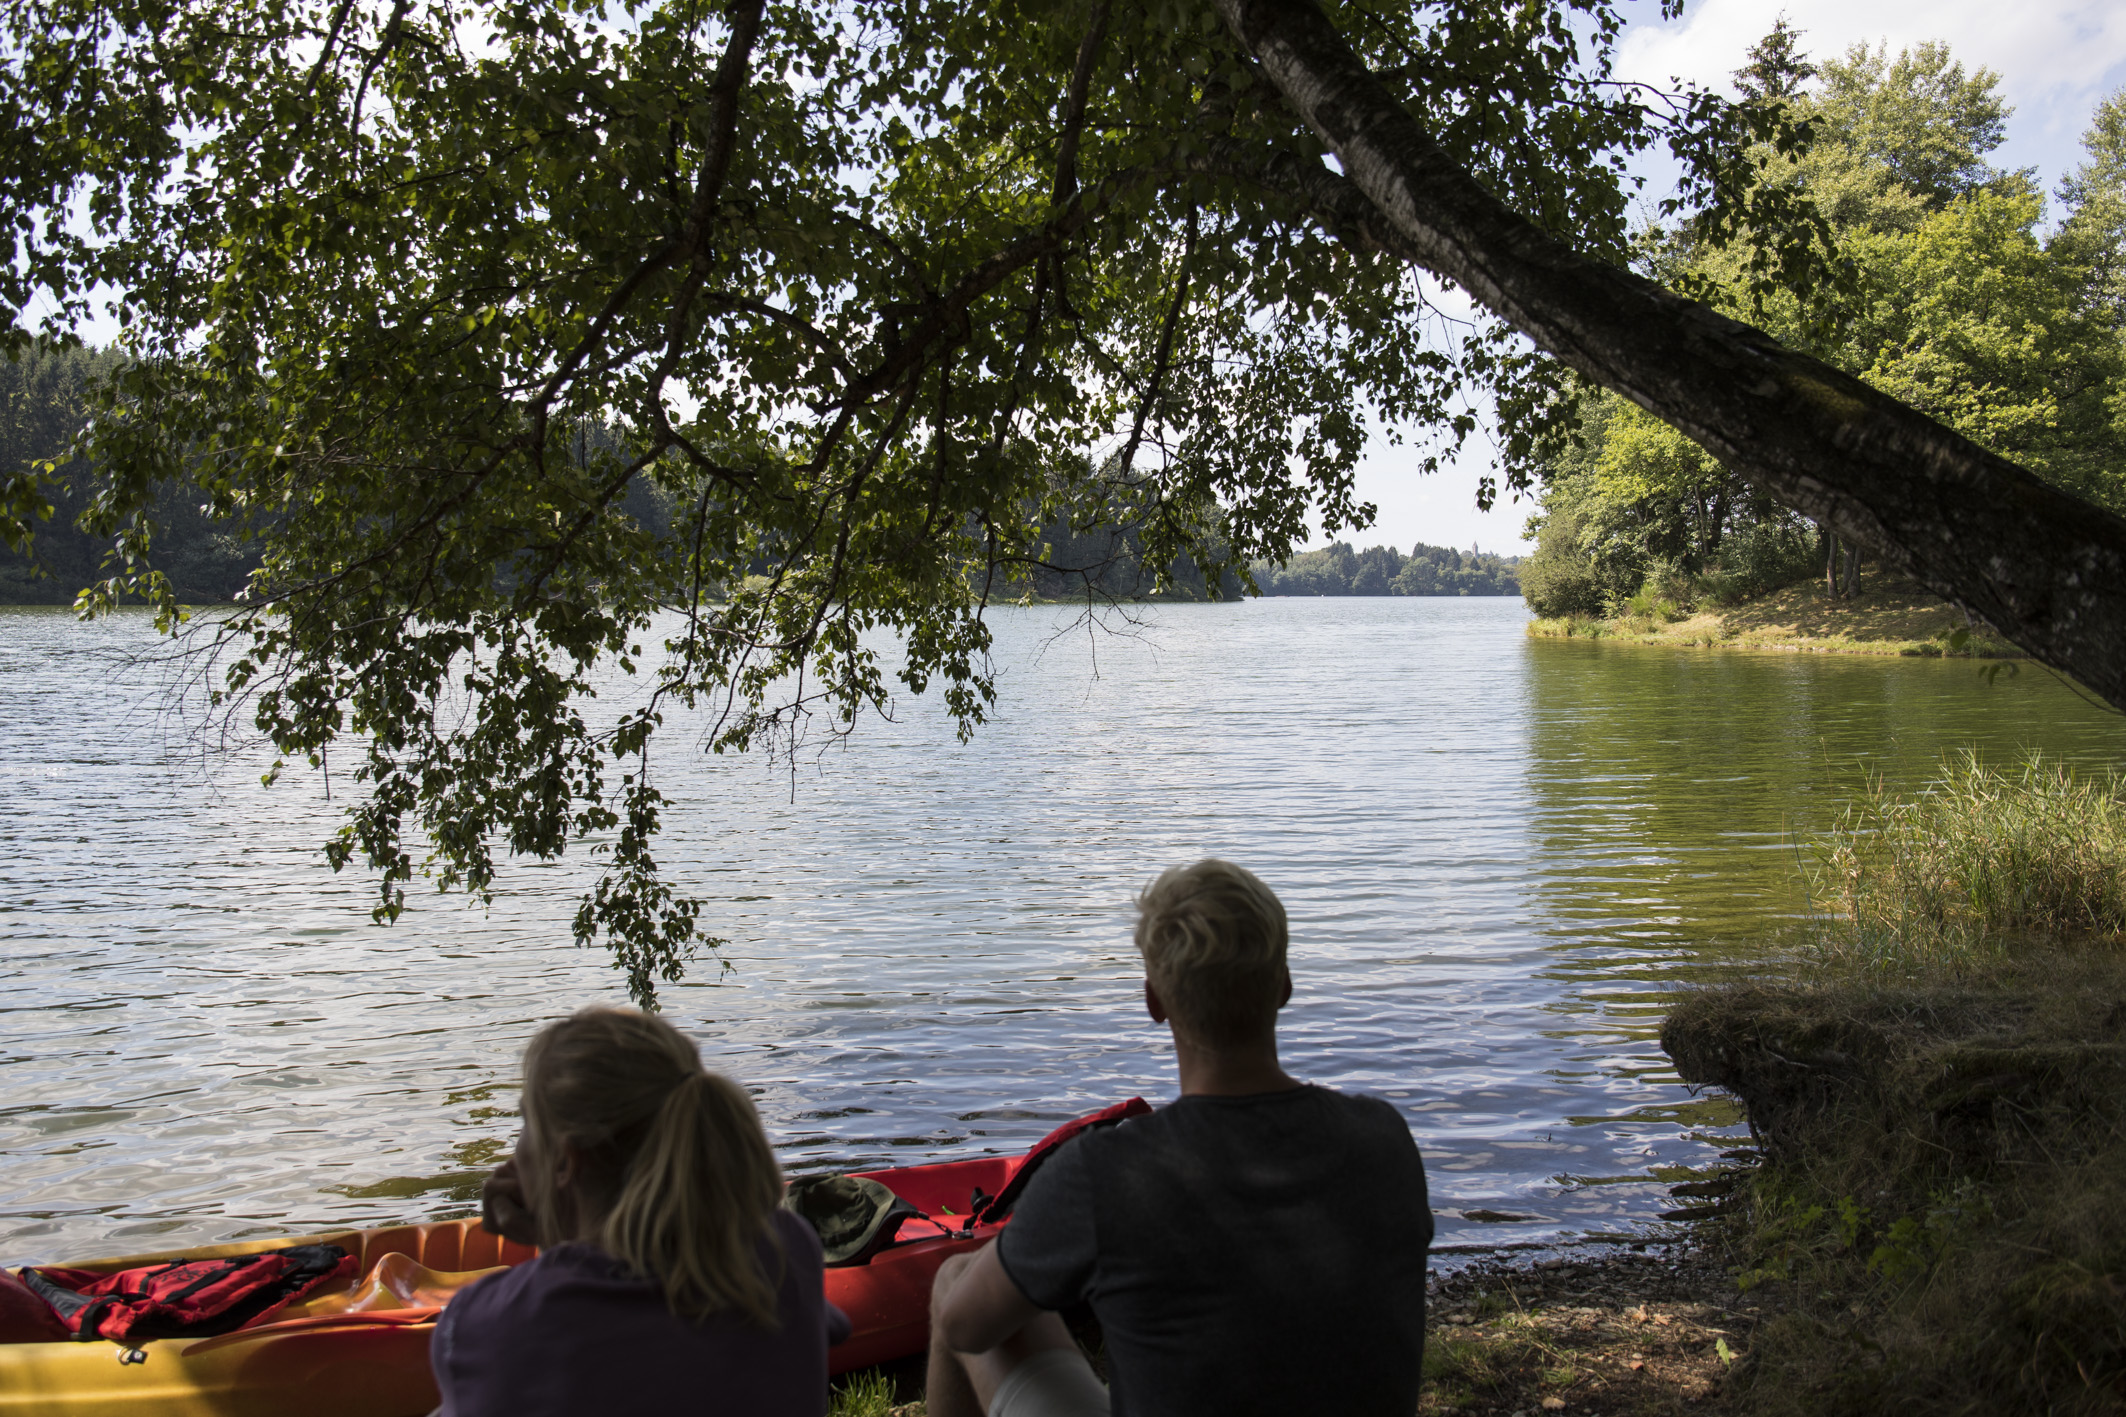 Kajaktour auf dem Bütgenbacher See